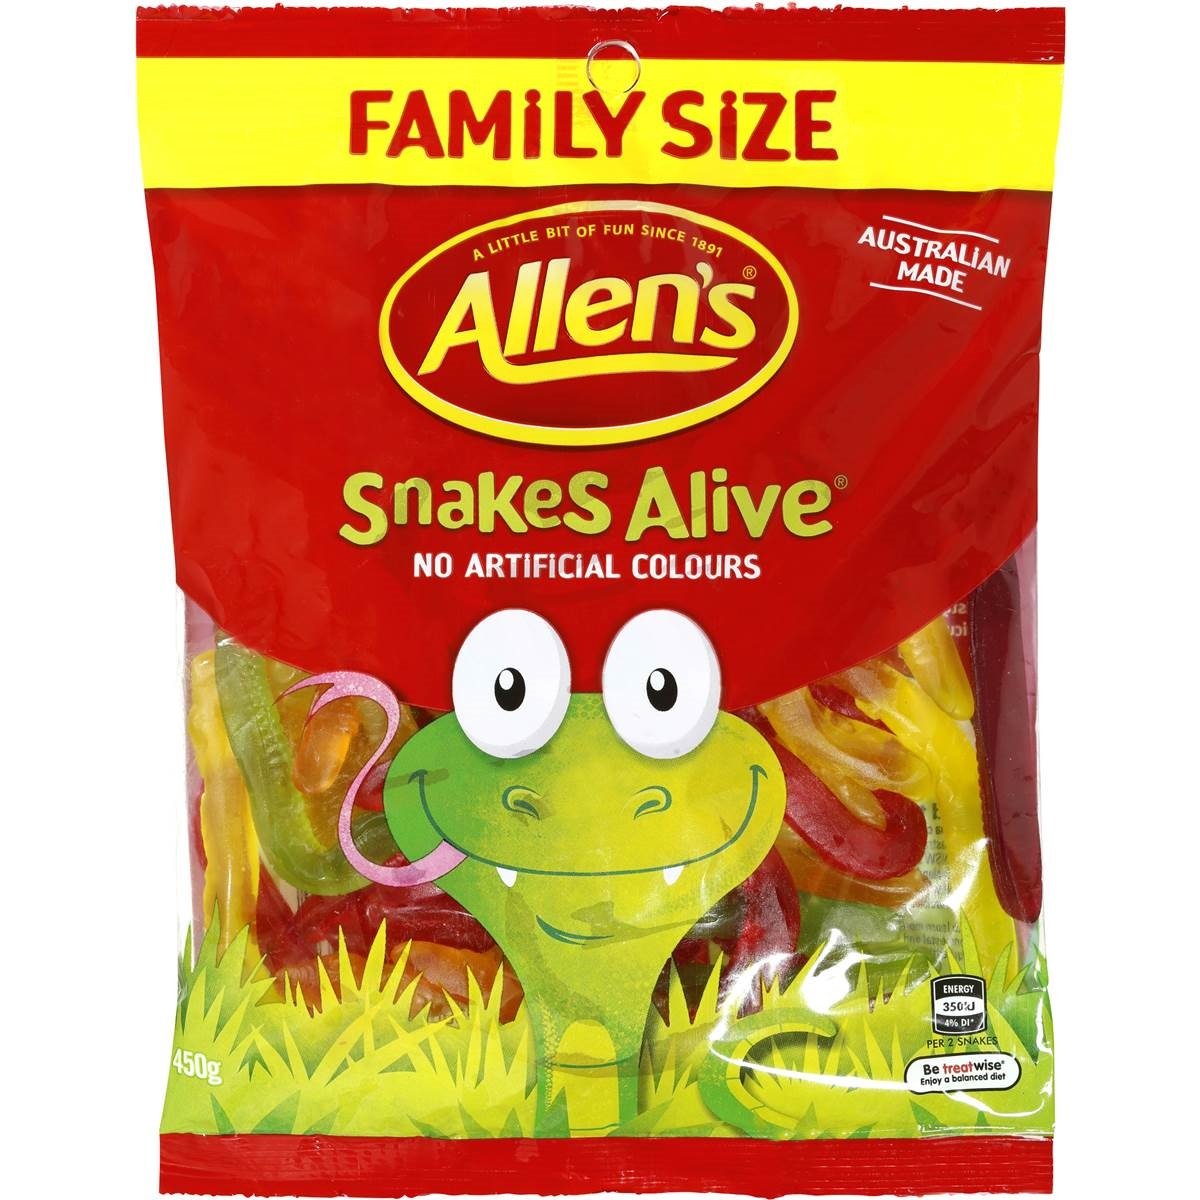 Allens Snakes Alive 460g Family Size (Made in Australia)